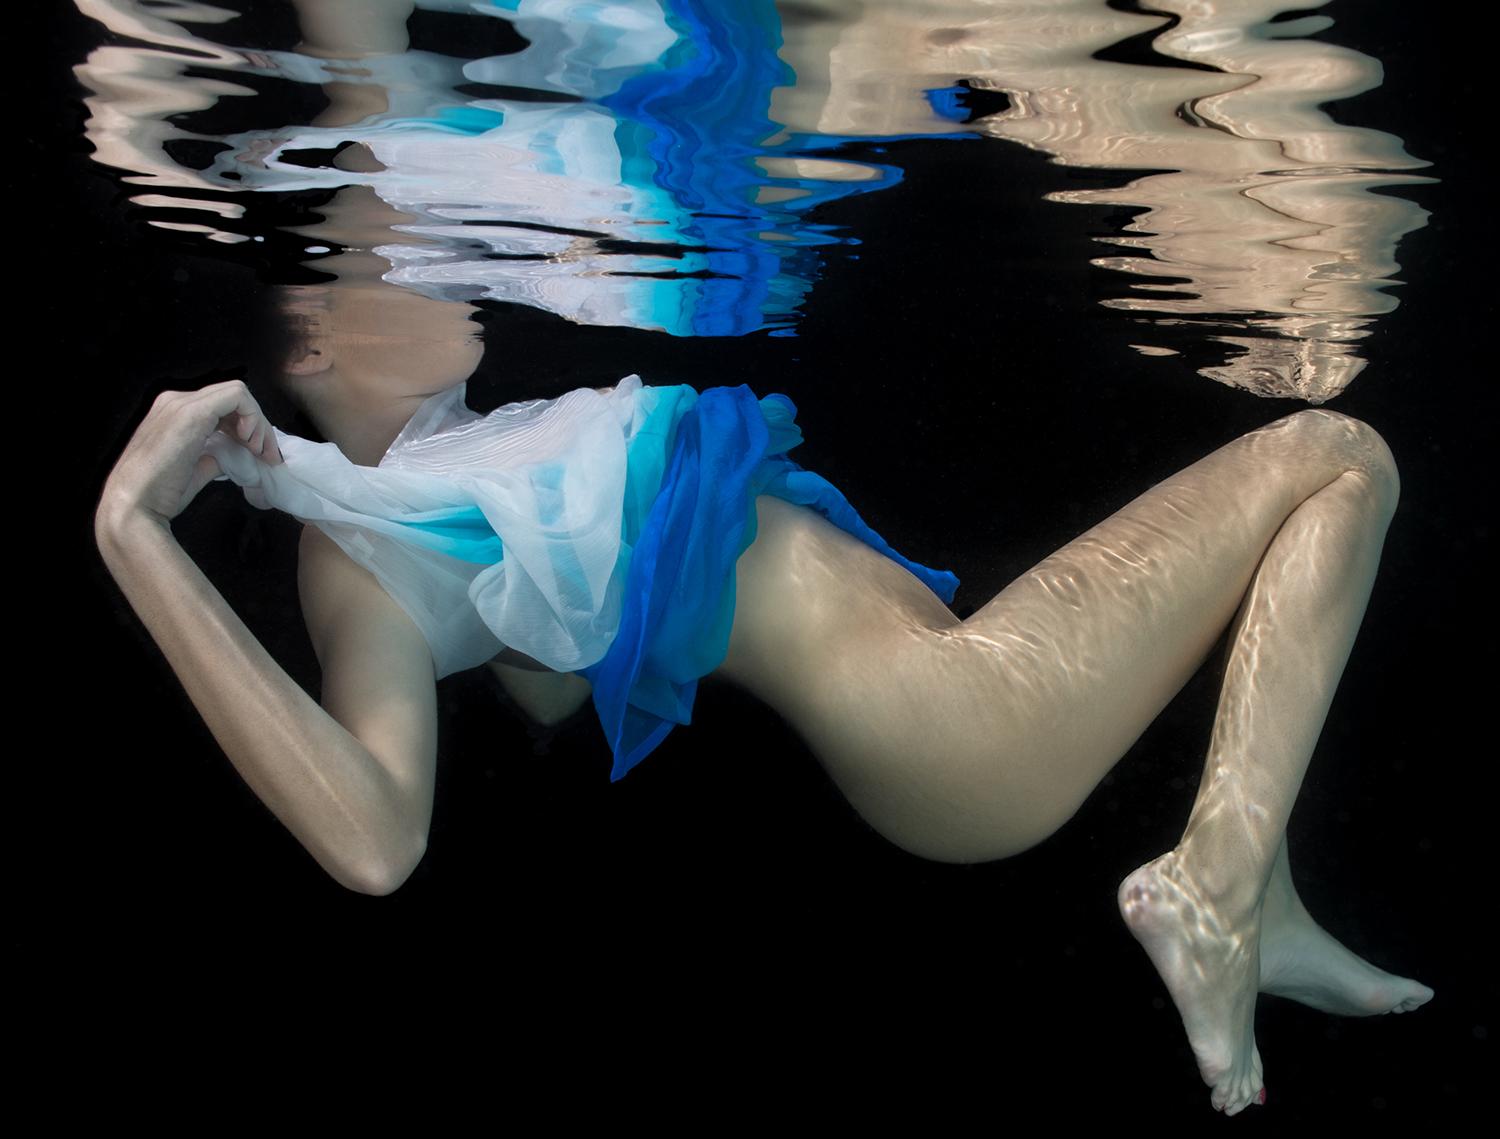 White and Blue - underwater semi-nude photograph - archival pigment 18